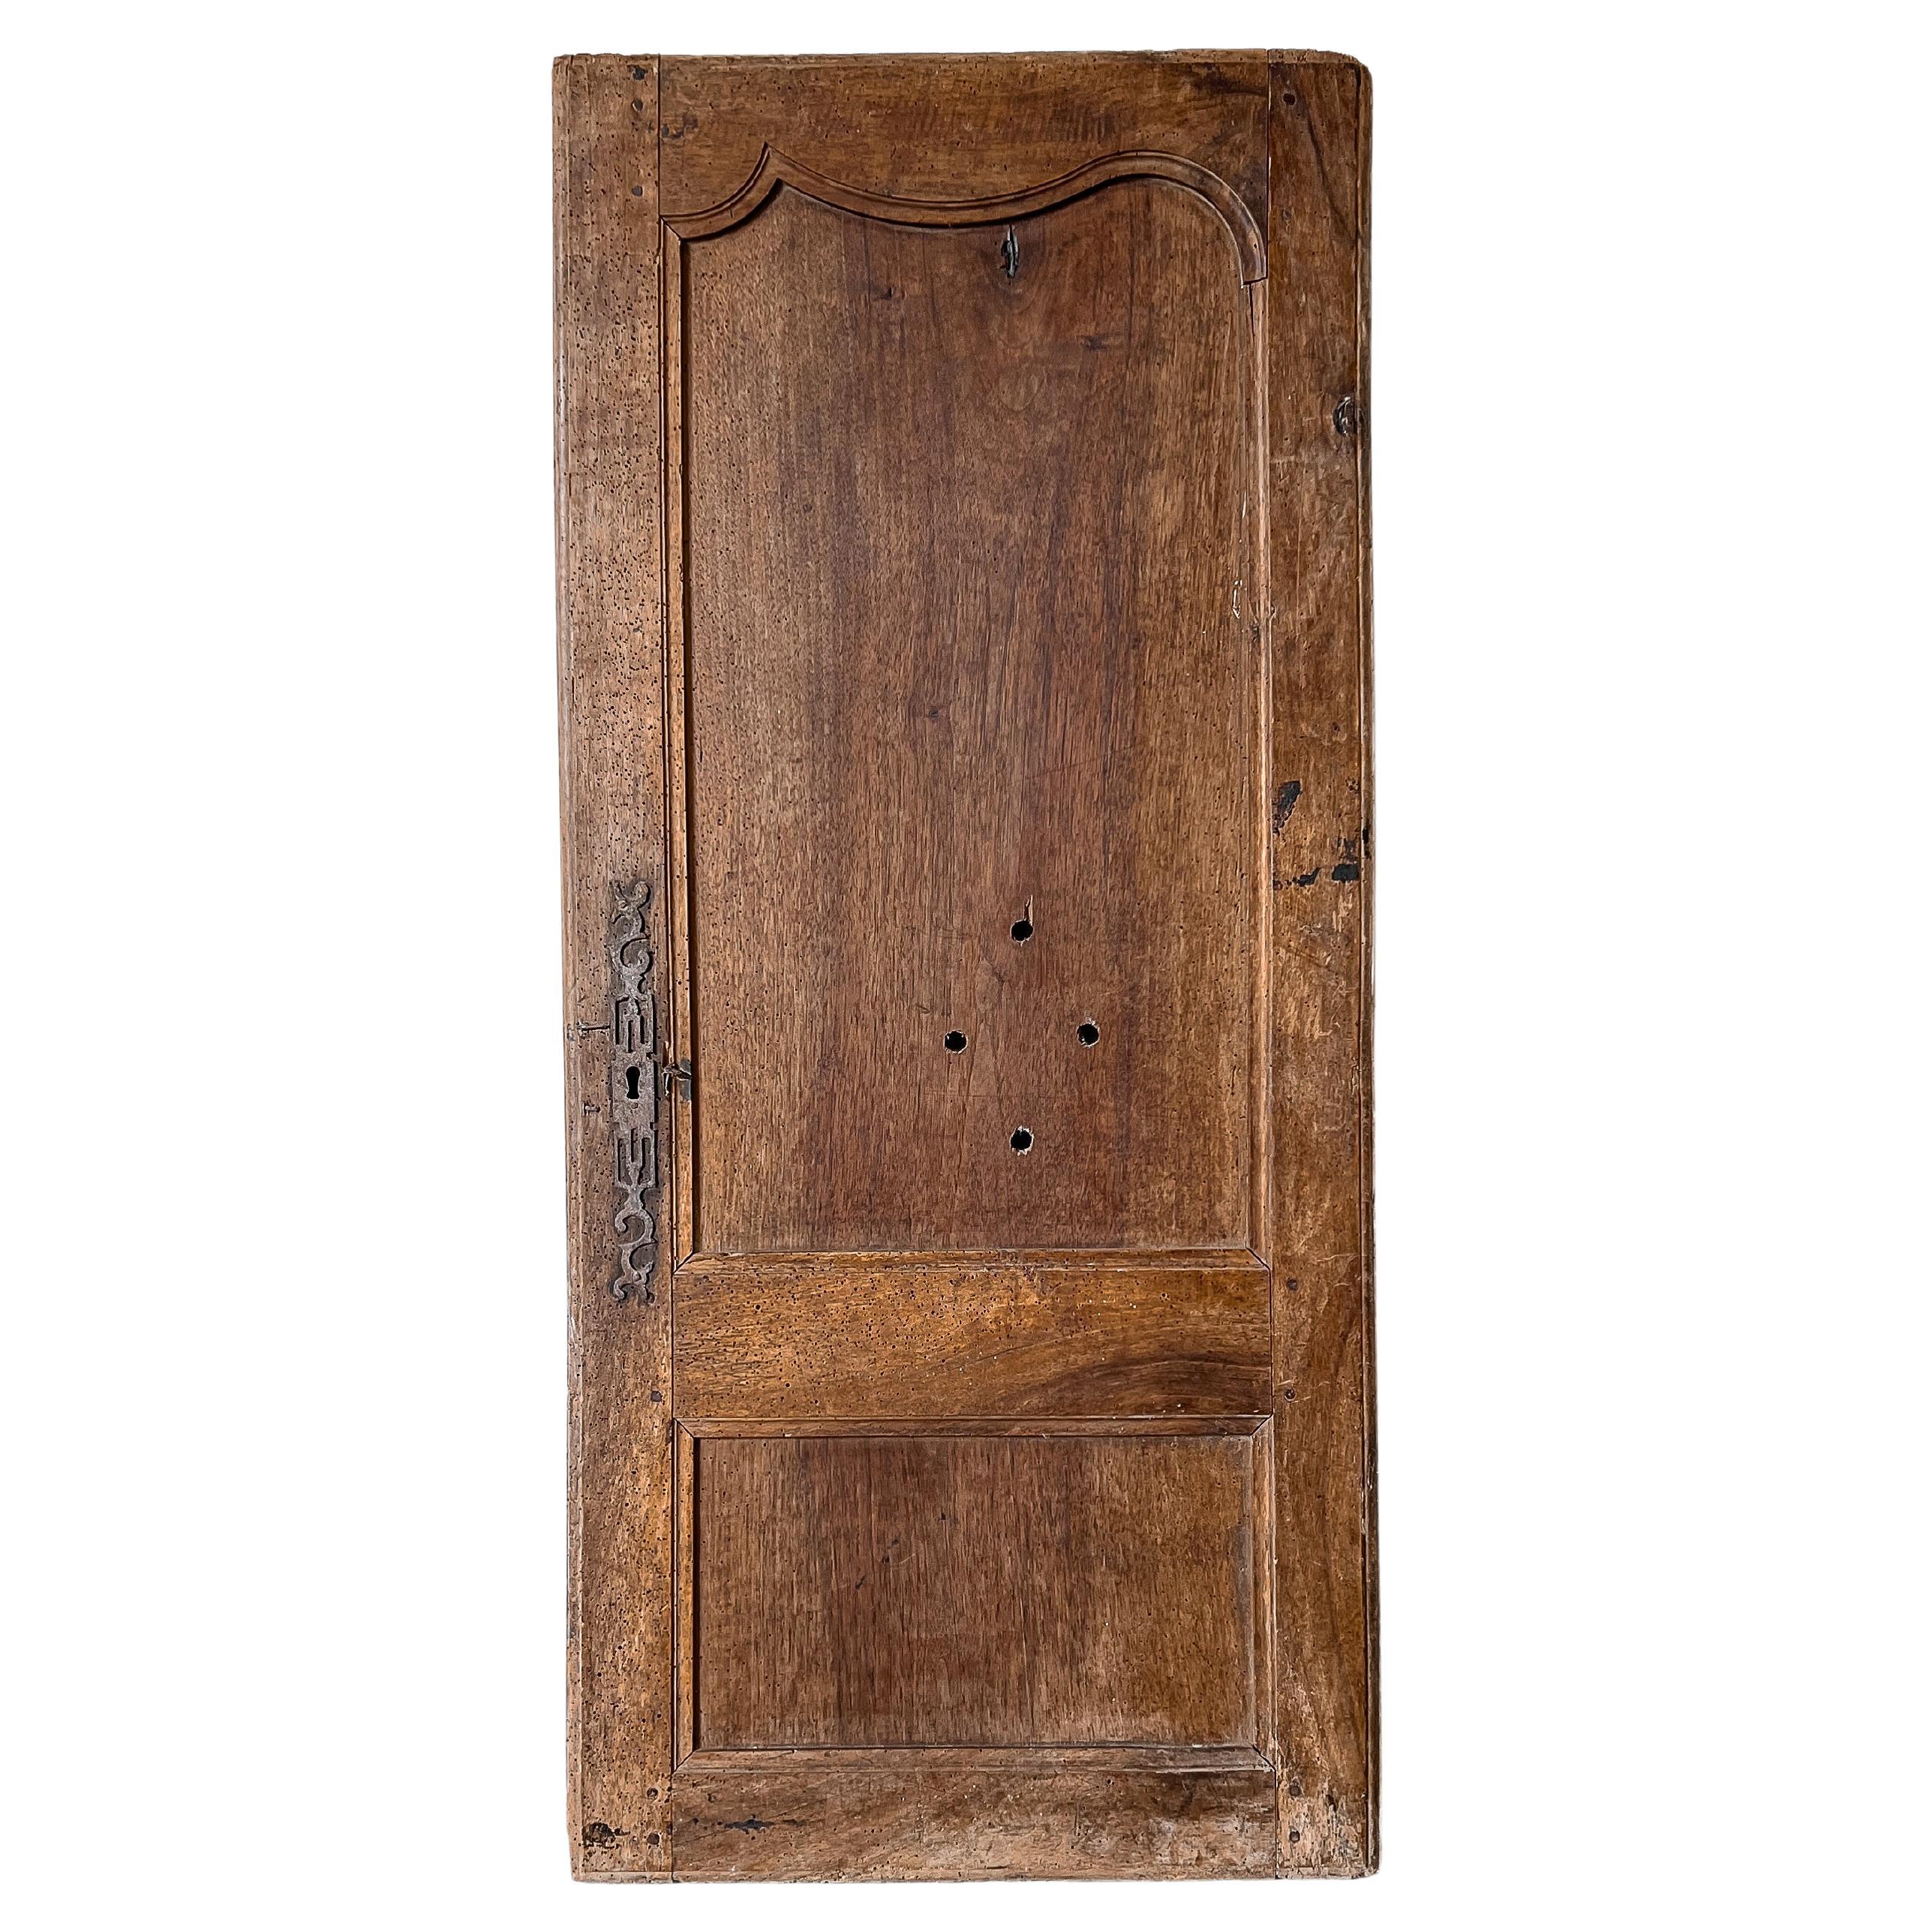 Single 19th Century French Provincial Cupboard Door